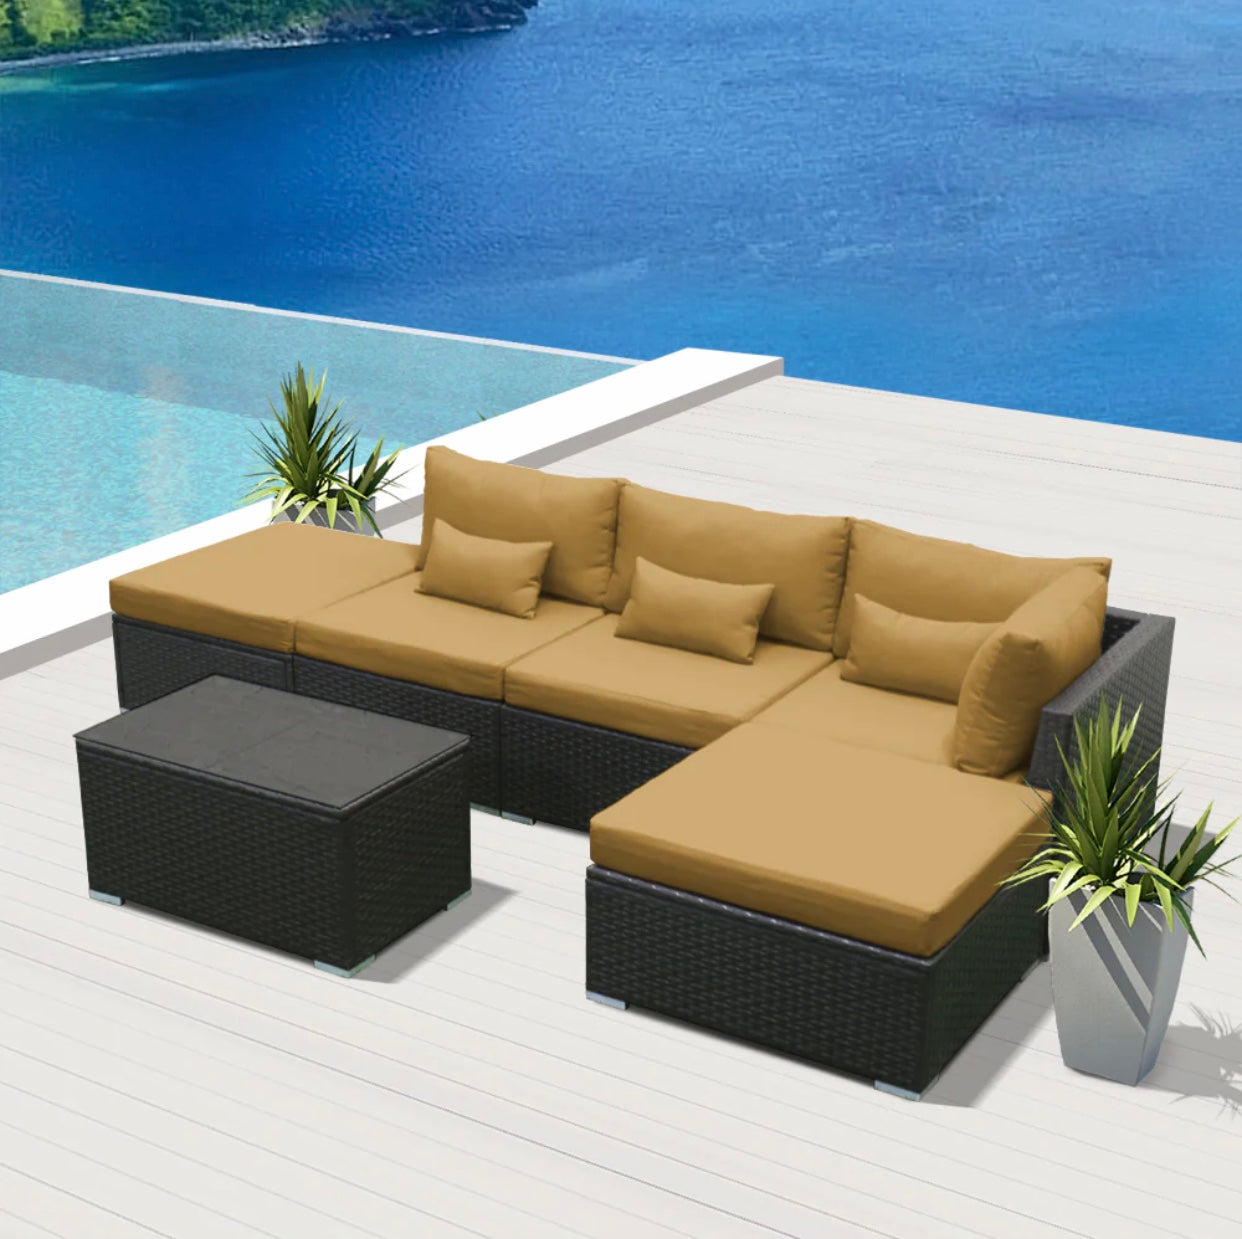 Beige Dark Brown Rattan Outdoor Garden Furniture Sets in 6 Pieces Six